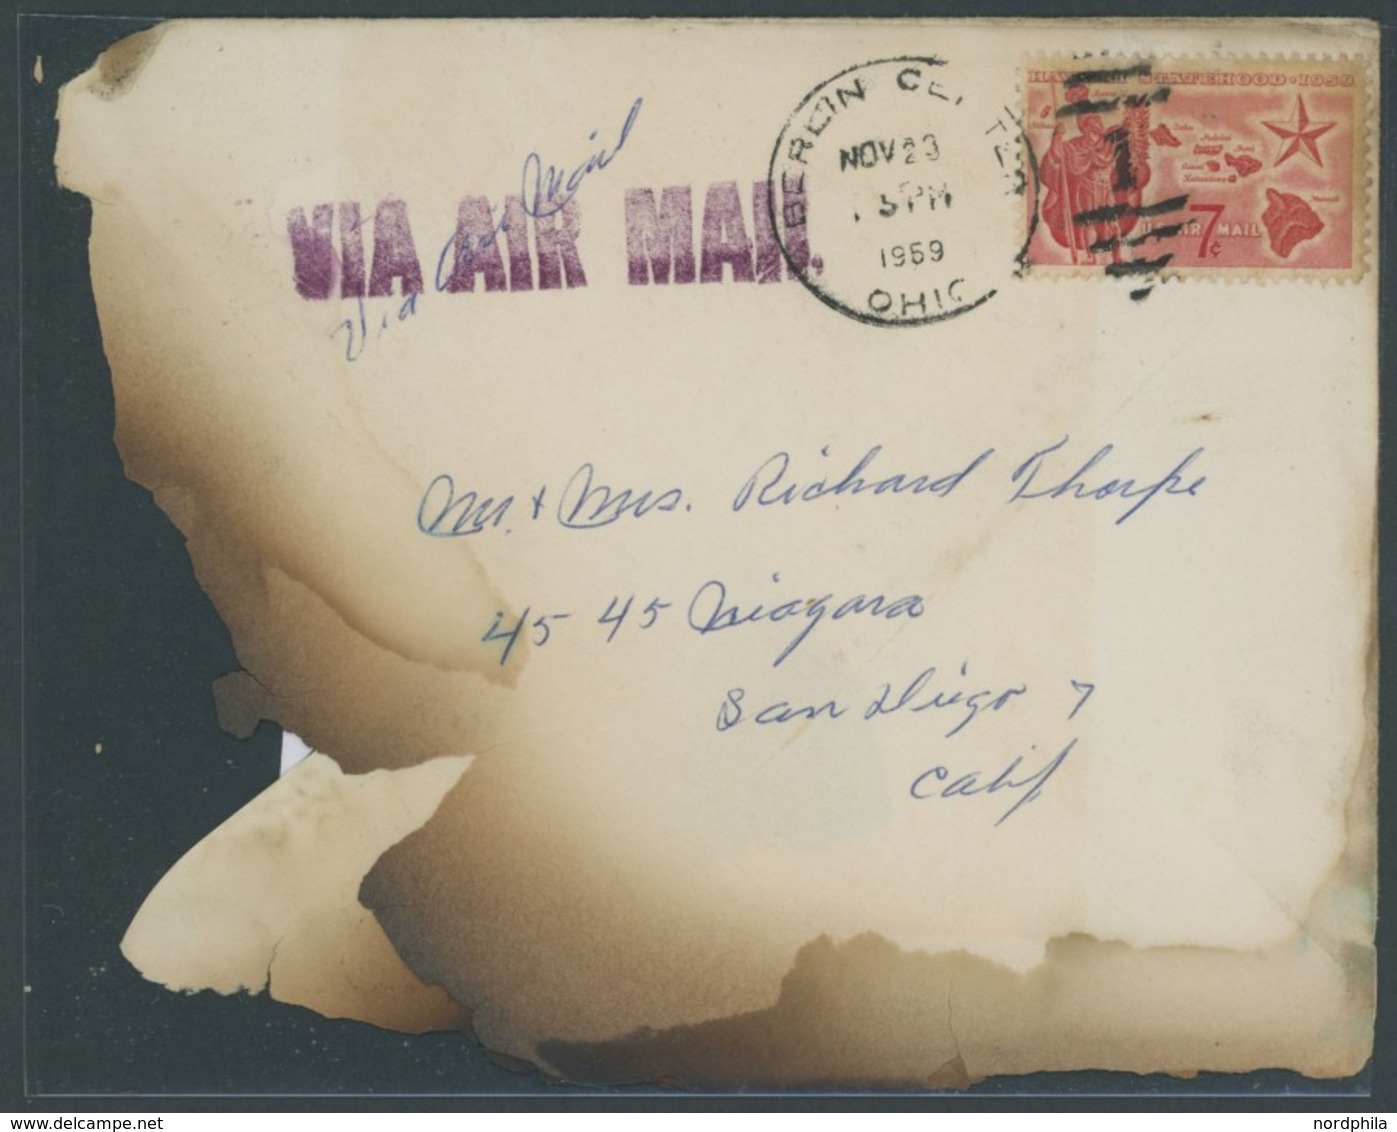 HAWAII 1959, Rückseitiger Aufkleber CHICAGO POST OFFICE ENCLOSURE RECOVERED FROM PLANE WRECK 11-24-59 Auf Angebräuntem T - Hawaii